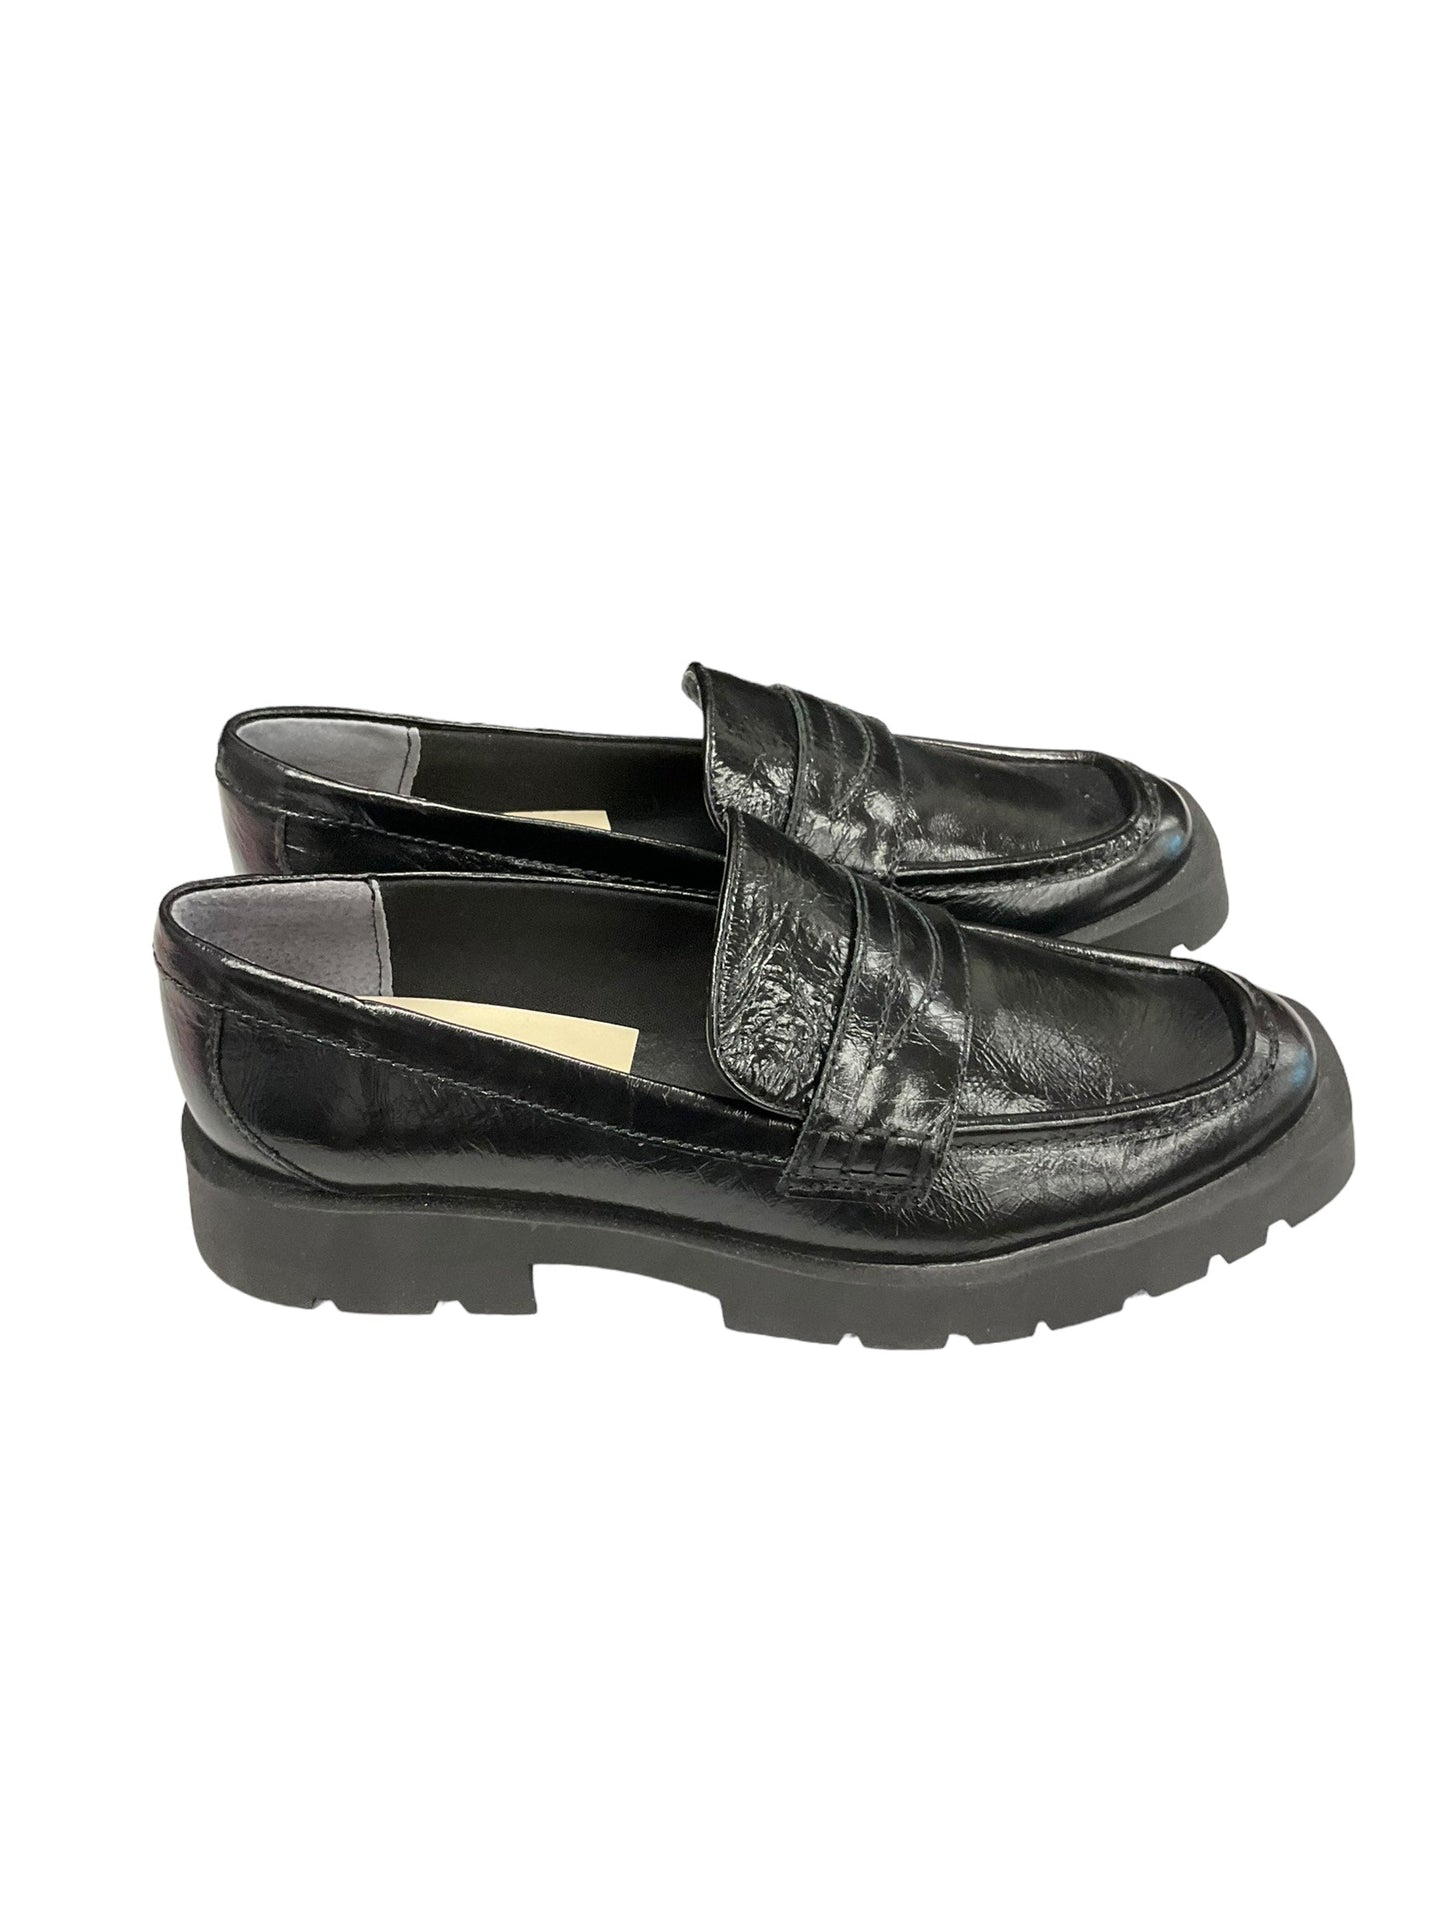 Black Shoes Flats Dolce Vita, Size 7.5